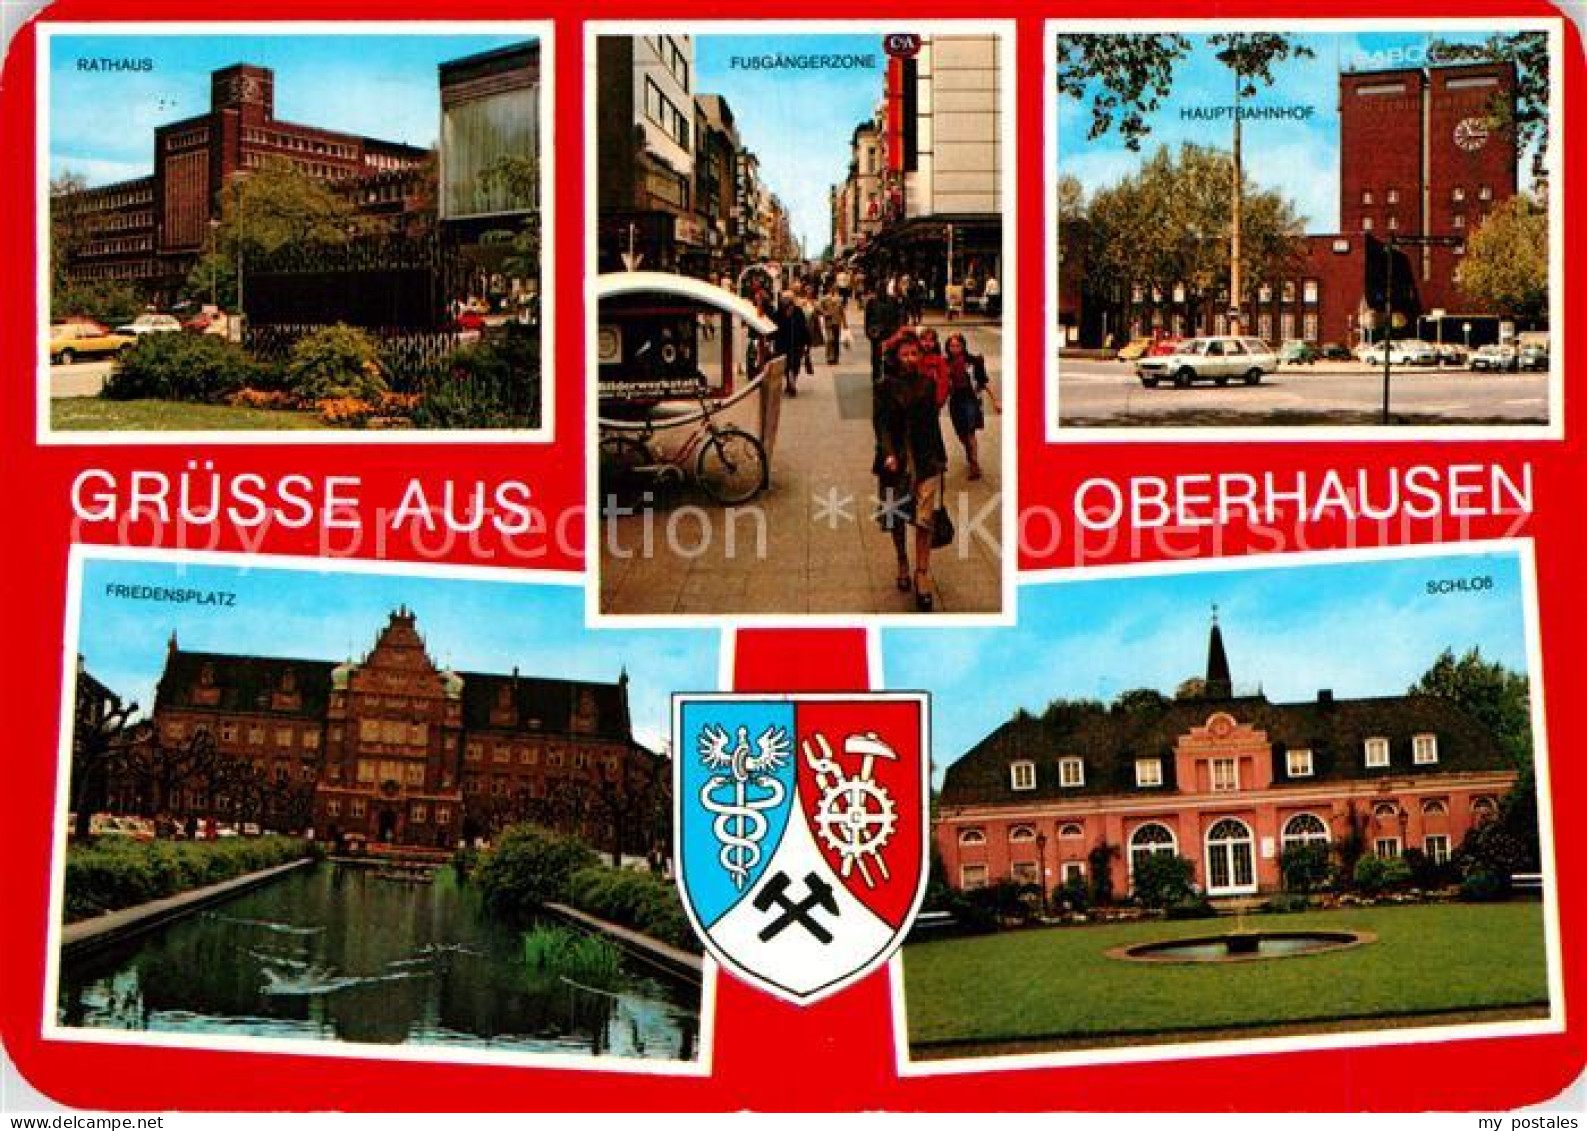 72993677 Oberhausen RathausFriedensplatz Fussgaengerzone Hauptbahnhof Schloss Ob - Oberhausen